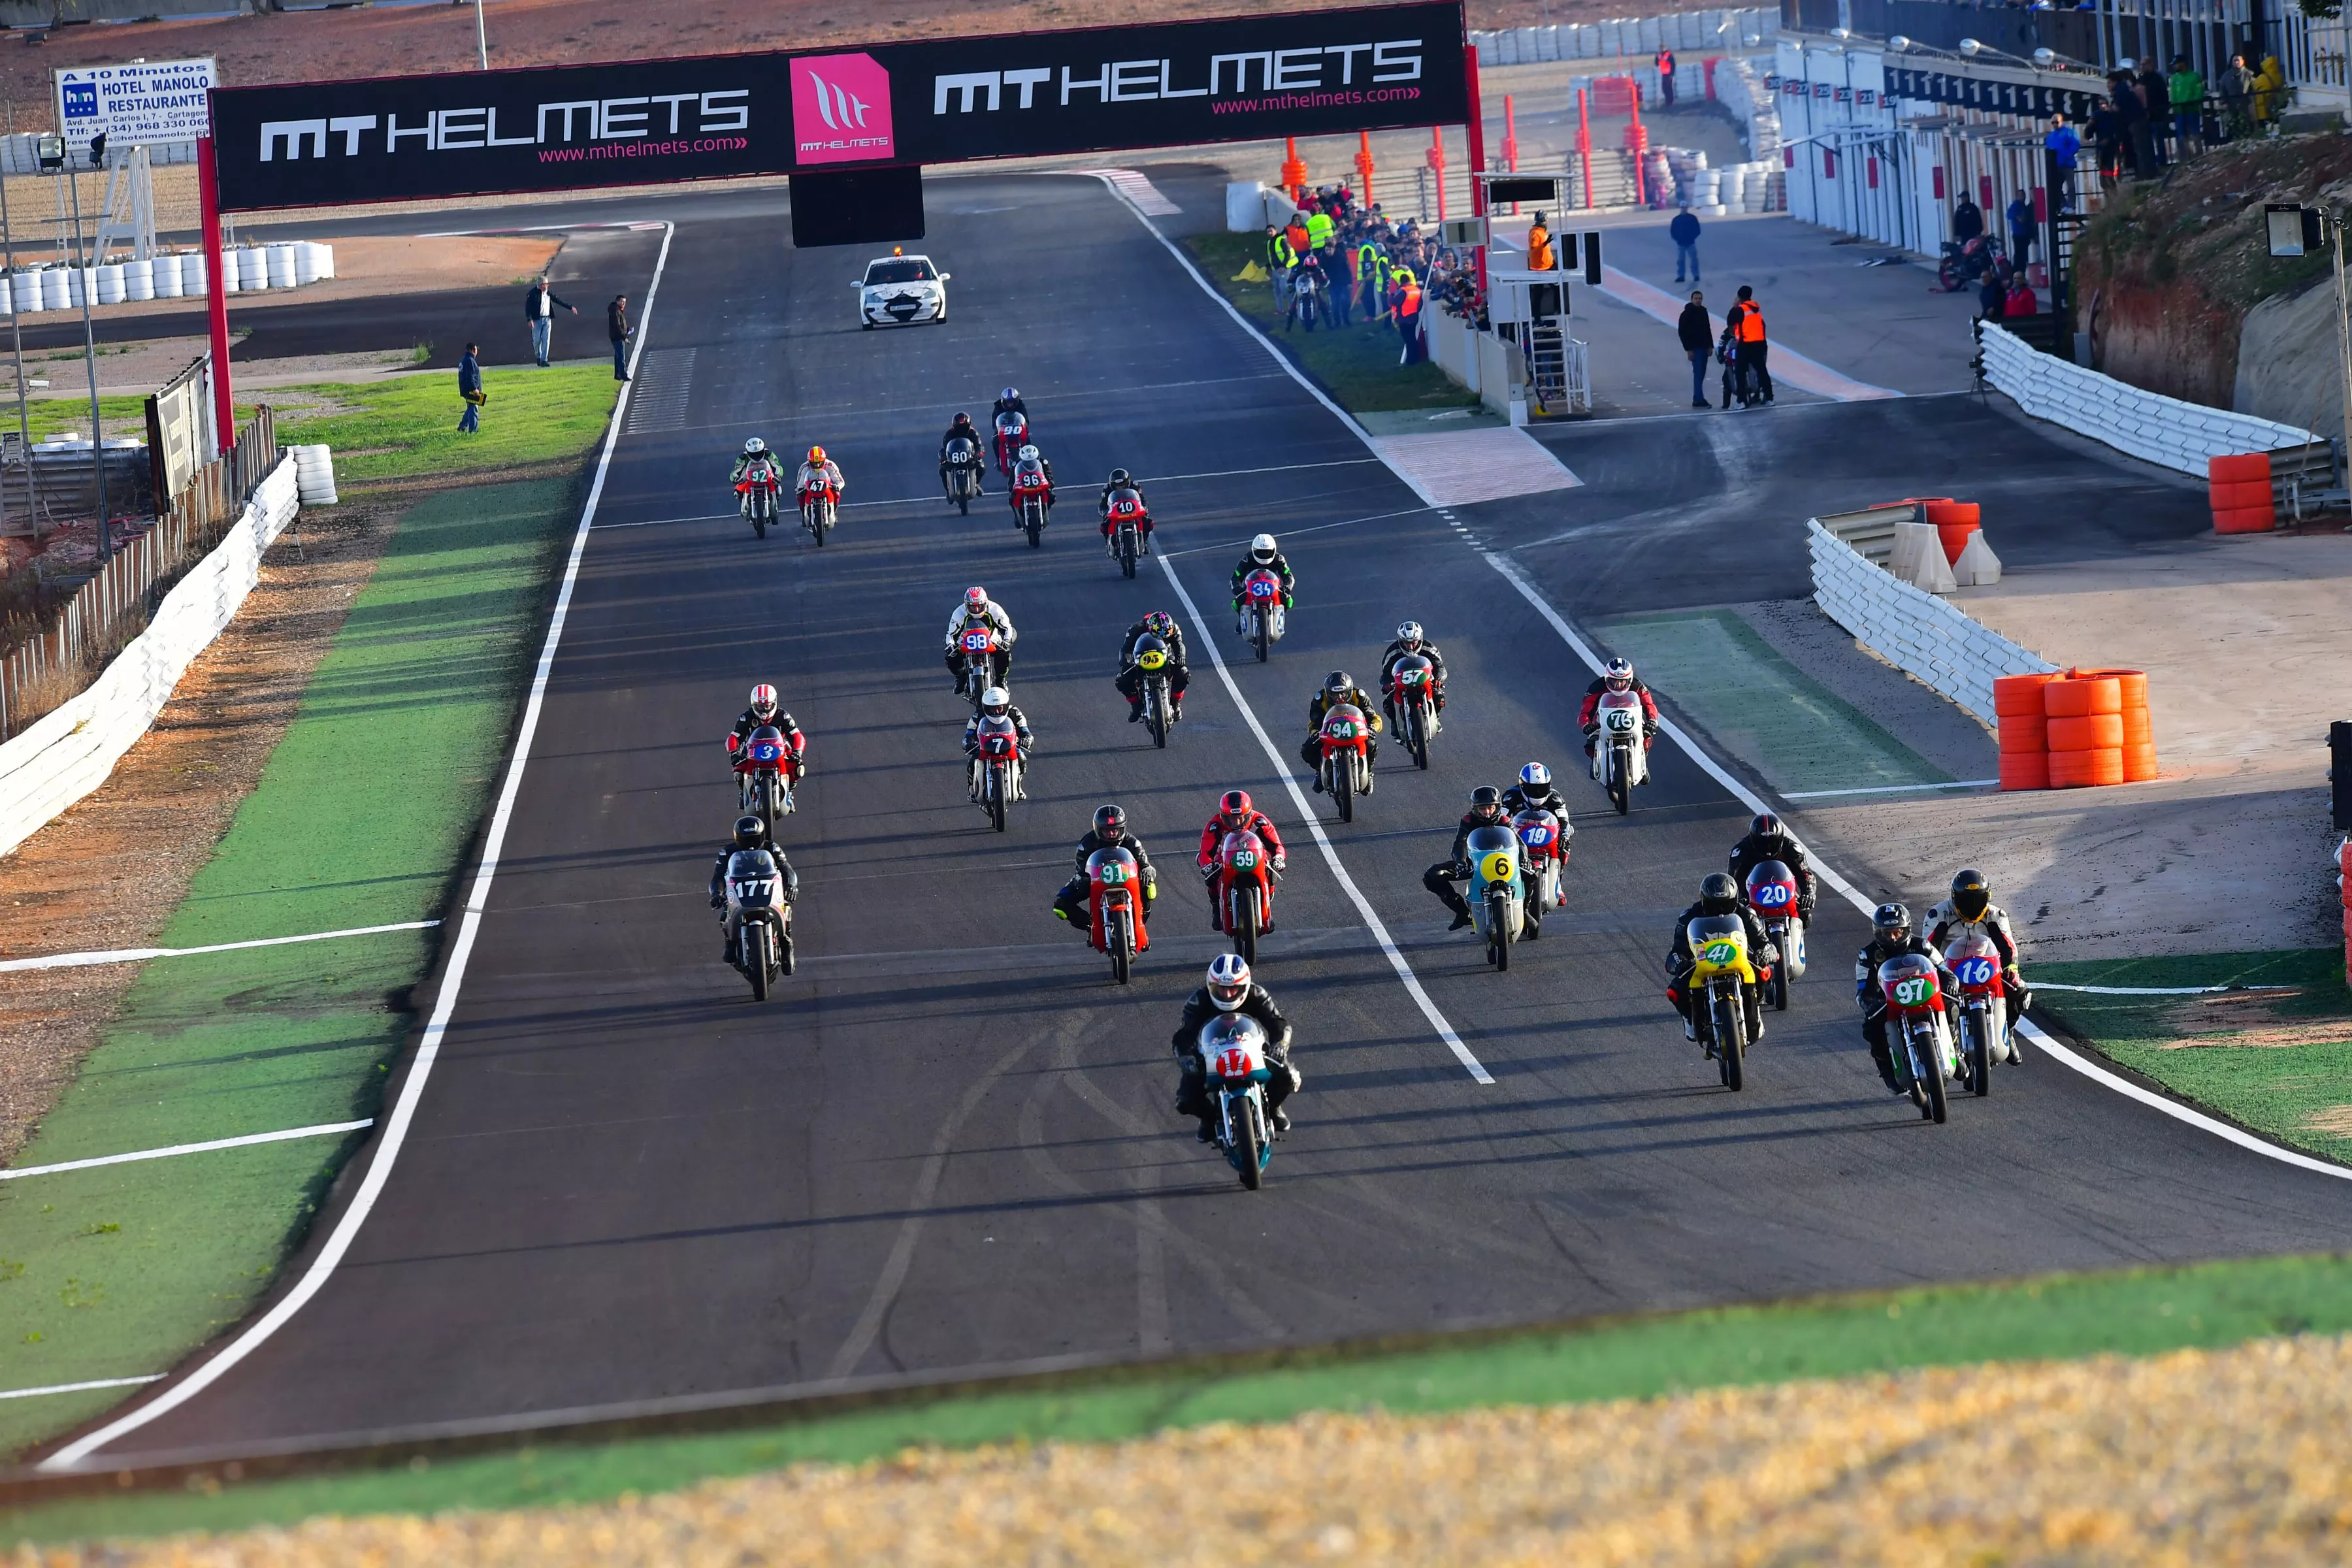 Circuito de Cartagena in Spain, Europe | Racing,Motorcycles - Rated 4.2